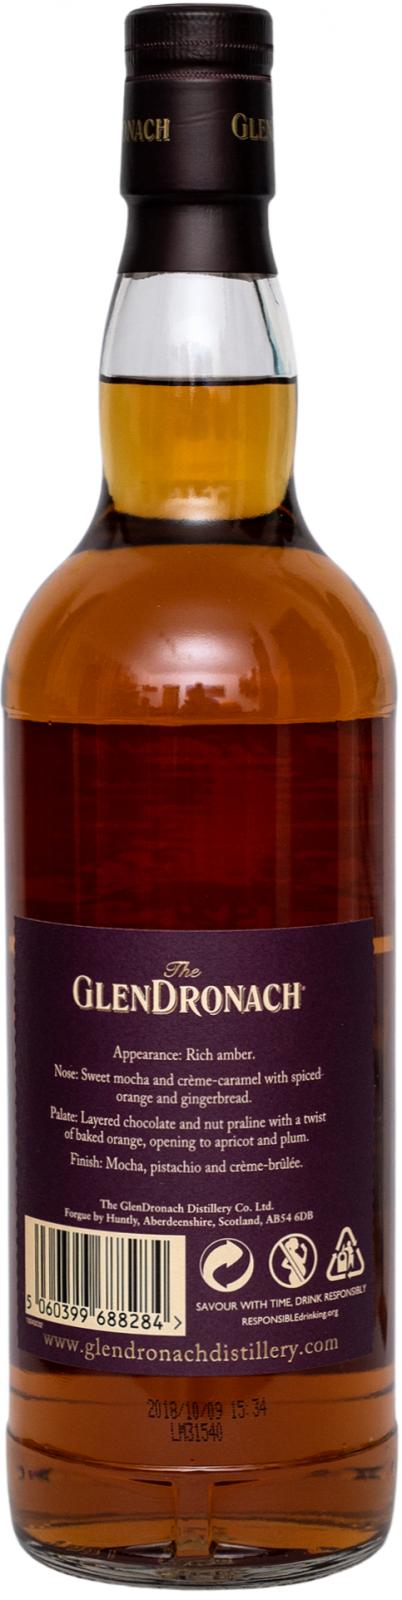 Glendronach 2007